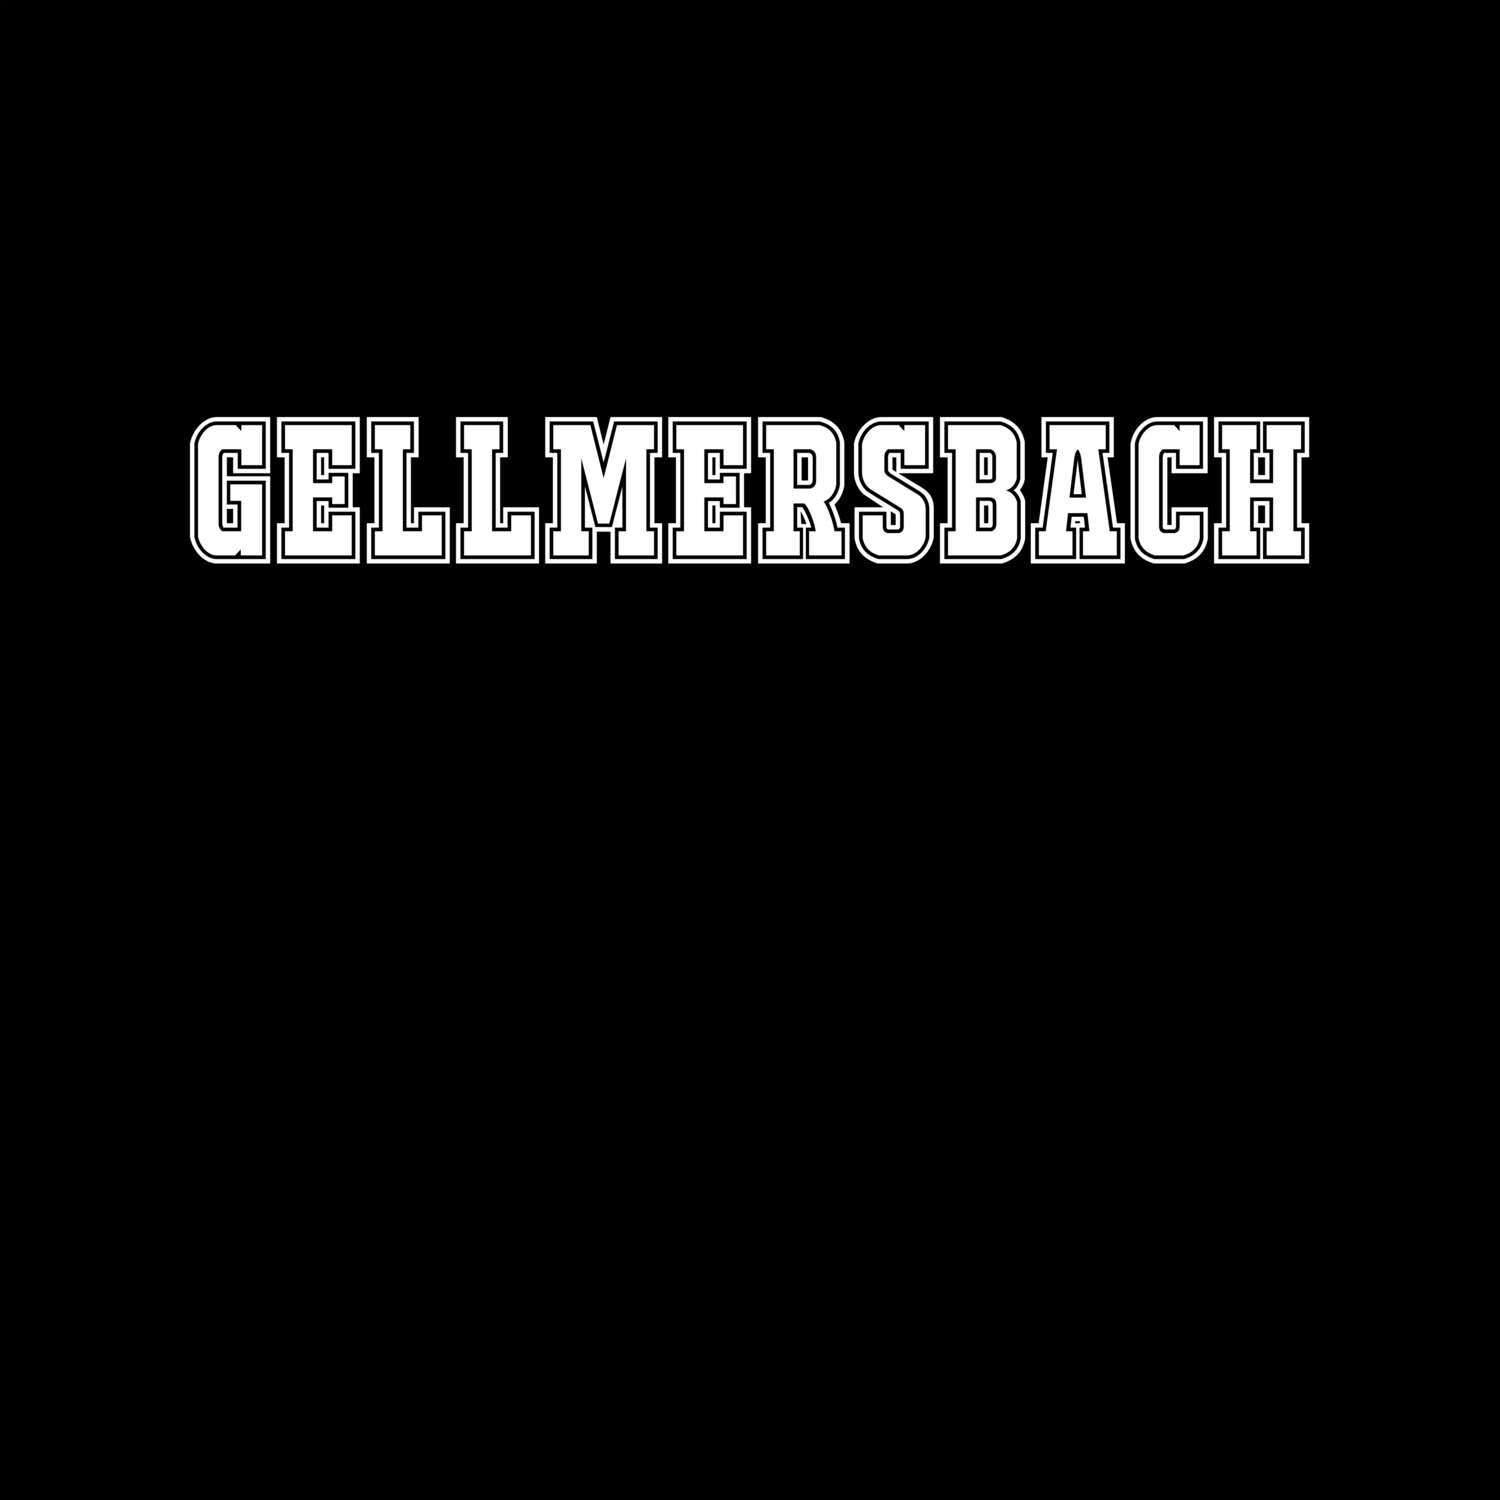 Gellmersbach T-Shirt »Classic«